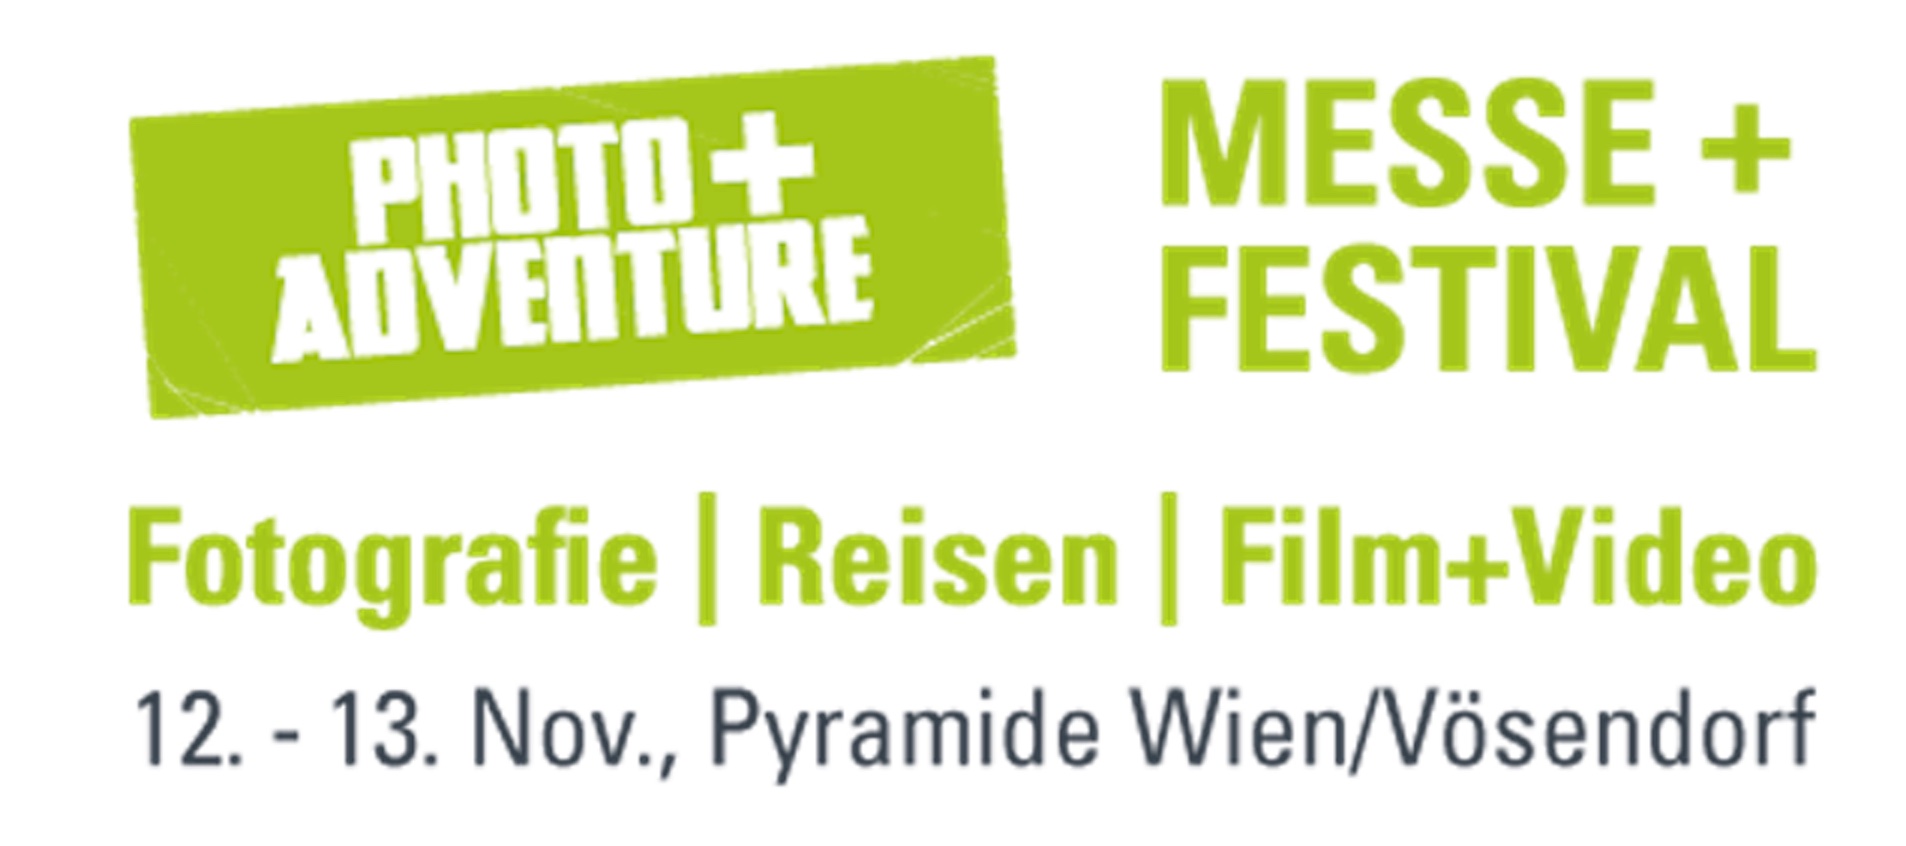 Photo + Adventure|  Messe + Festival 